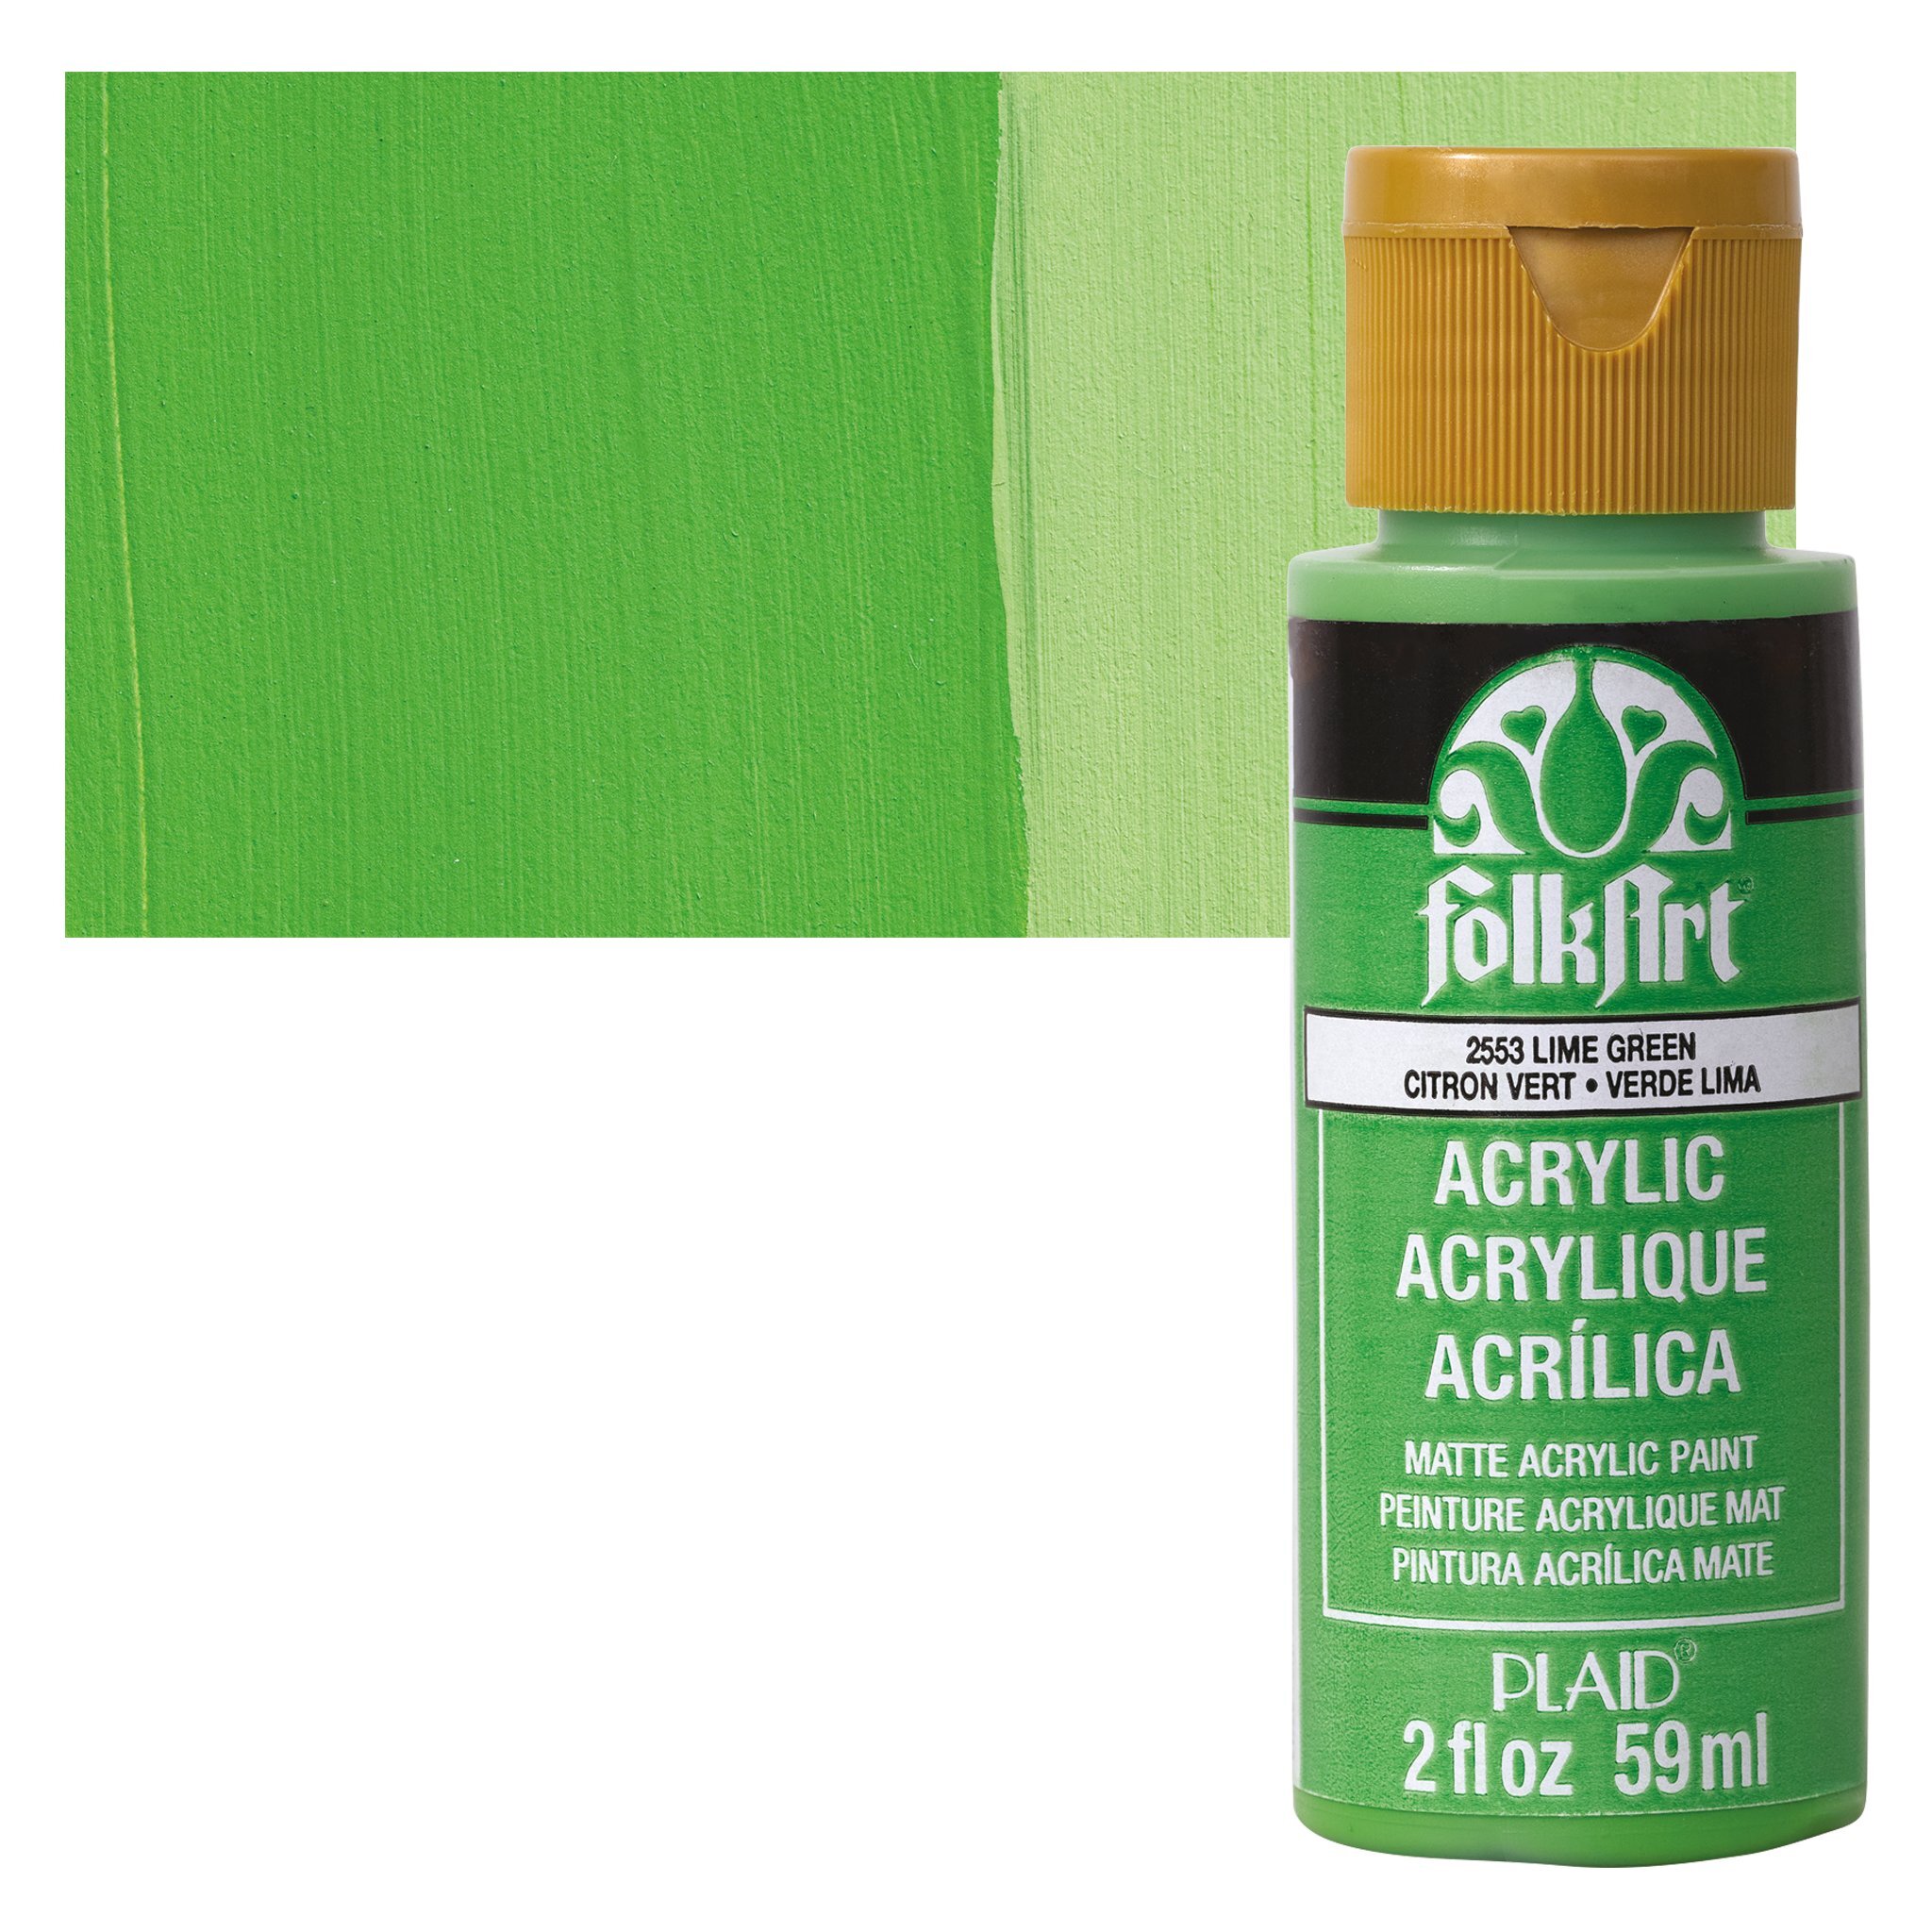 FolkArt Matte Acrylic Paint - Linen, 2 oz, Bottle